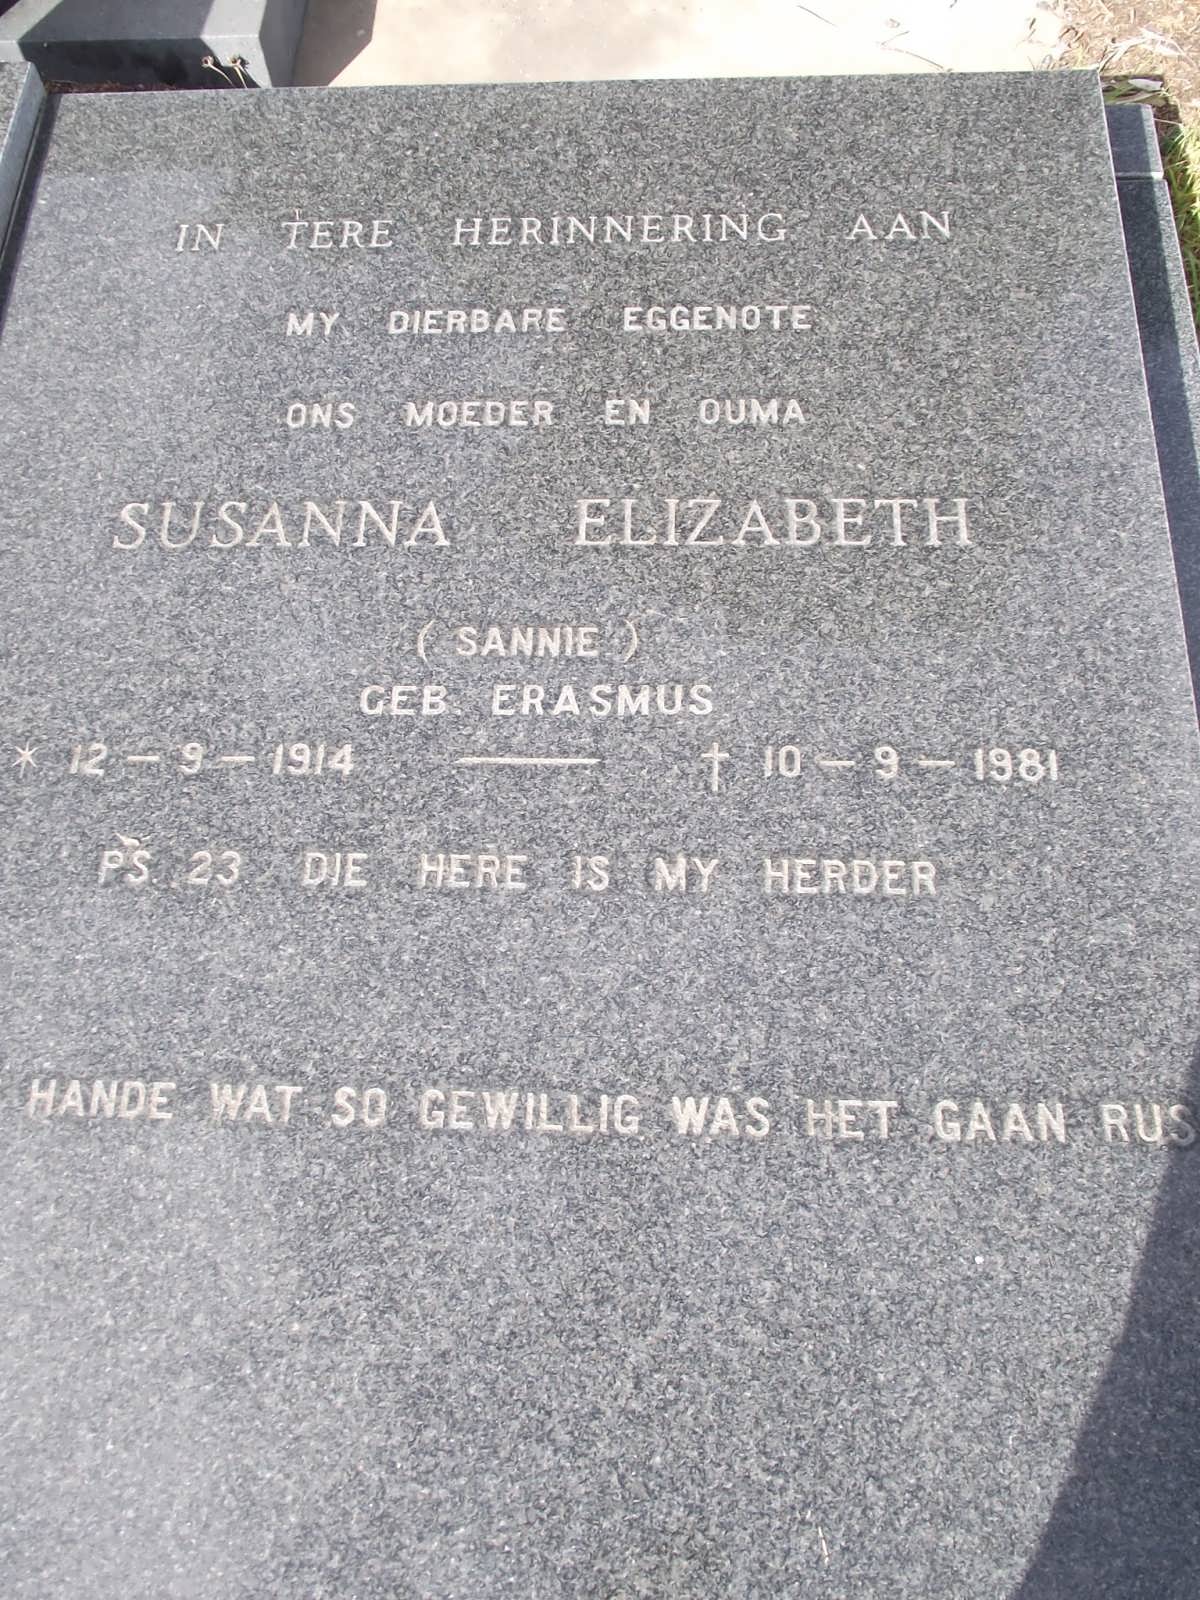 HECHTER Charel David 1912-1983 & Susanna Elizabeth nee Erasmus 1914-1981